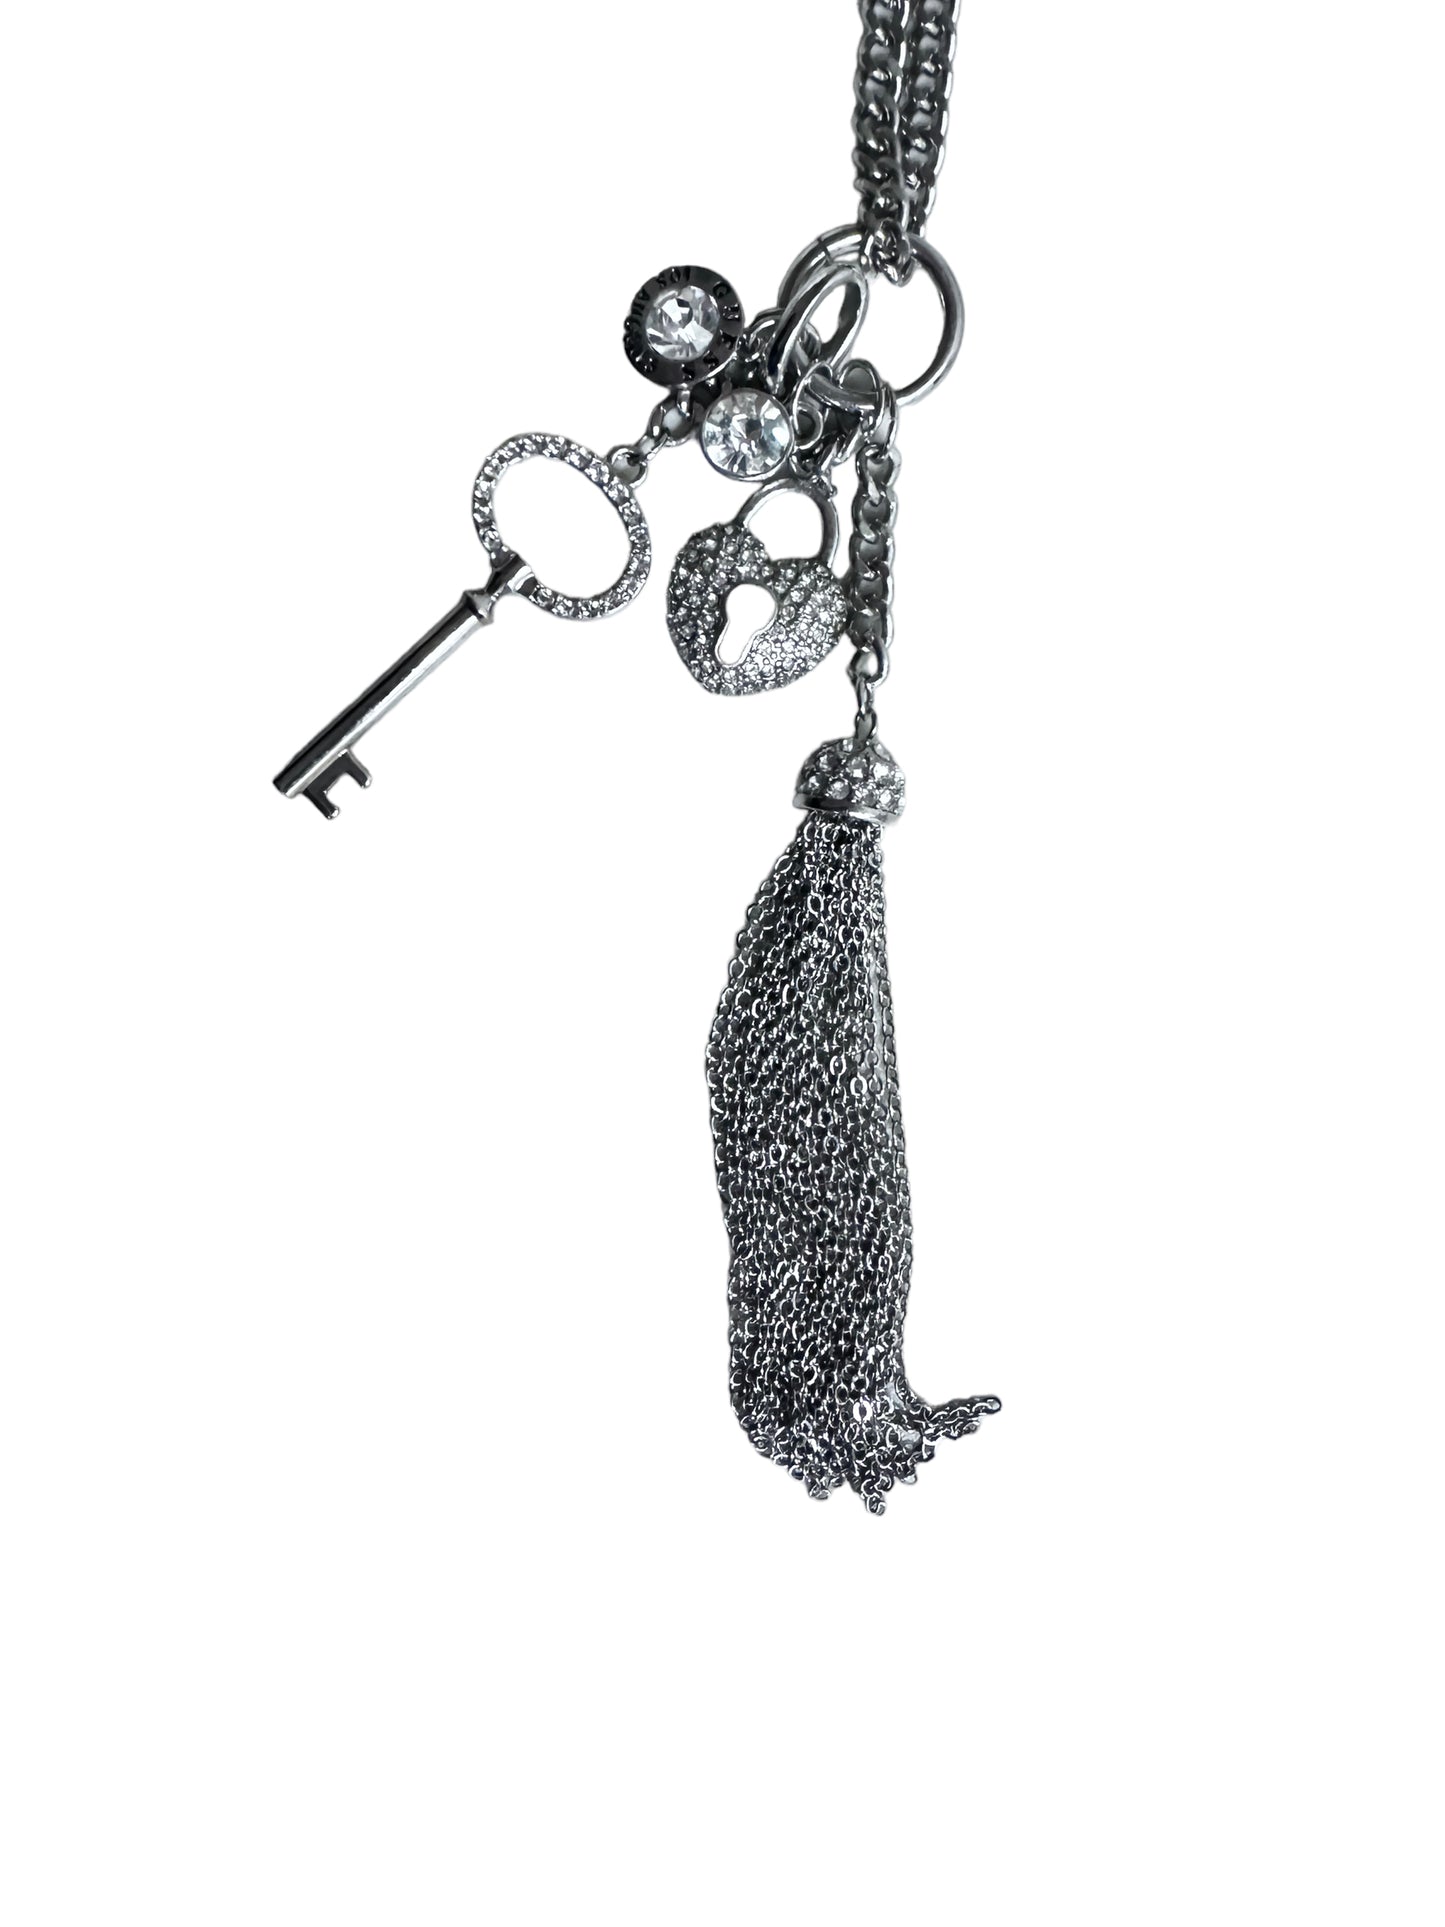 Necklace Pendant By Lia Sophia Jewelry  Size: 18